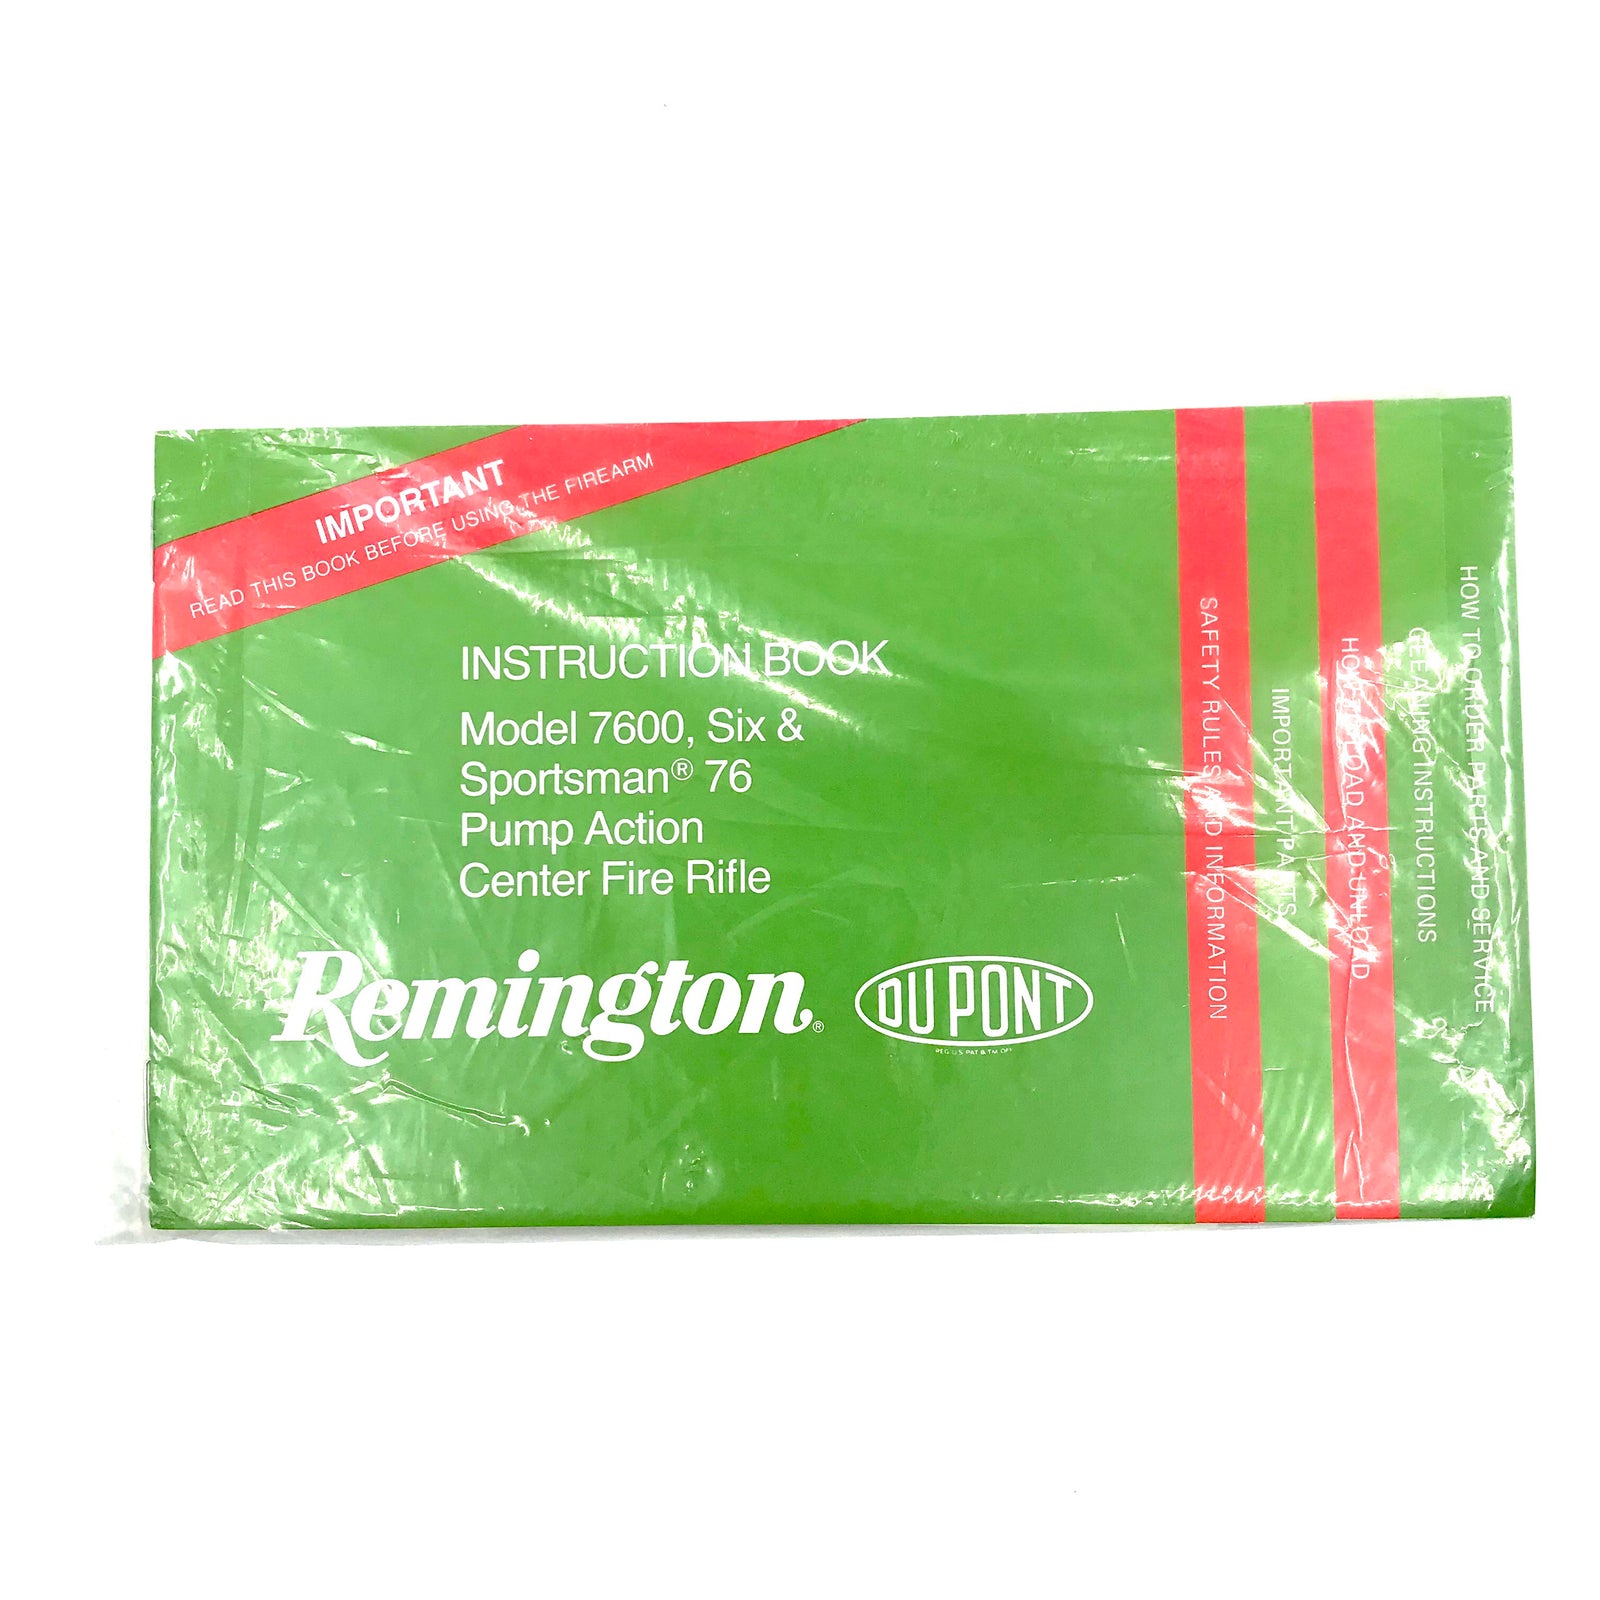 Remington Model 7600, Six & Sportsman 76 Instruction Book